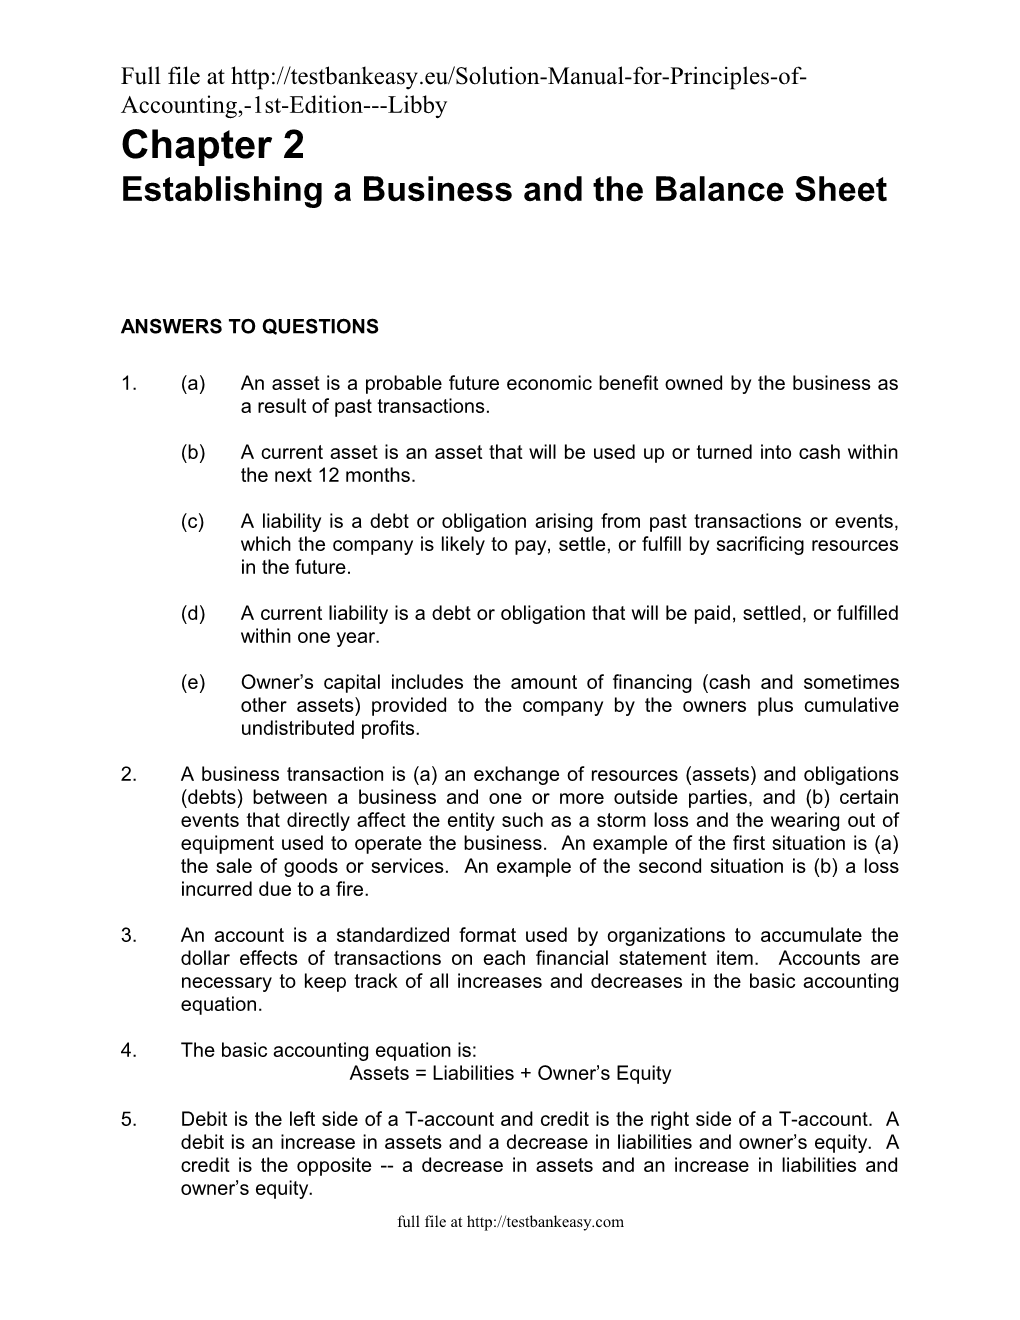 Establishing a Business and the Balance Sheet